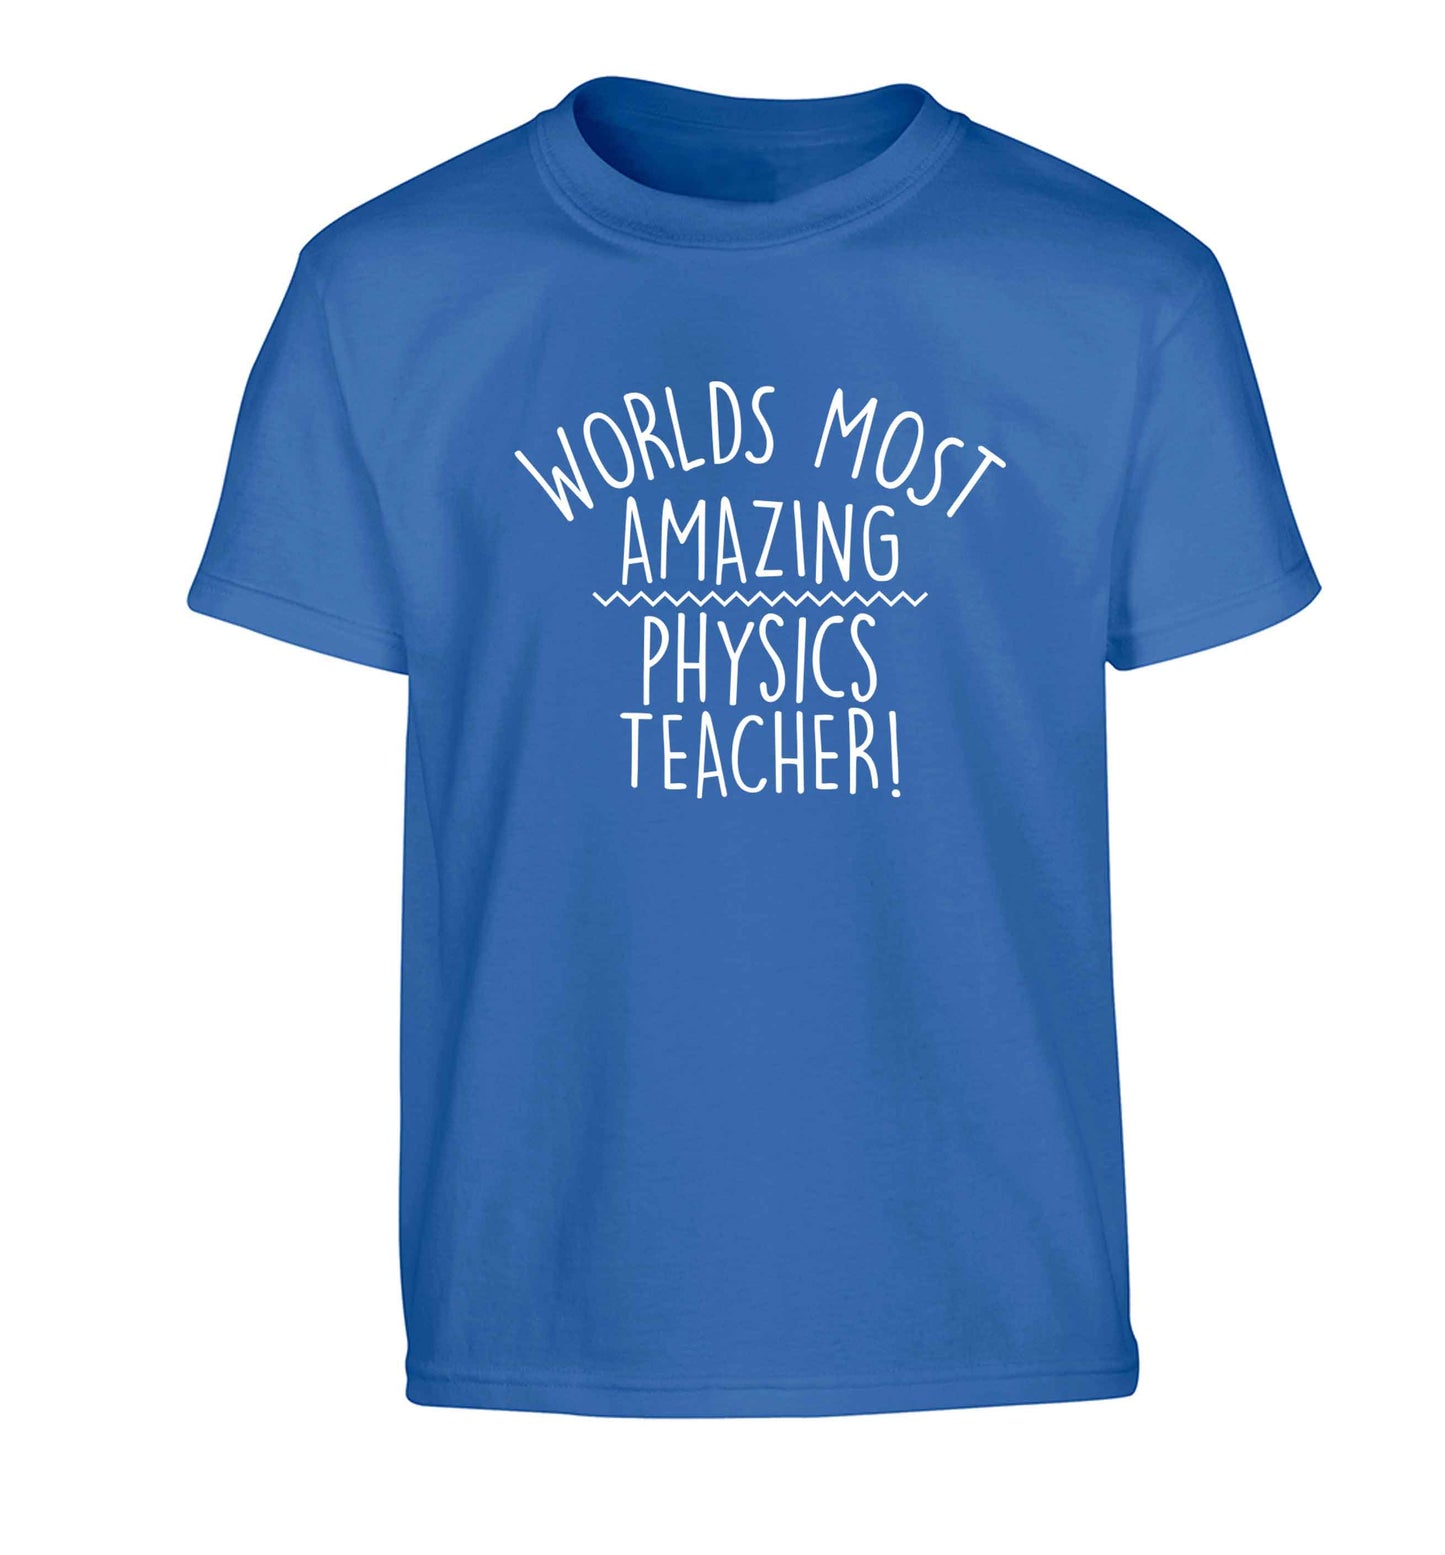 Worlds most amazing physics teacher Children's blue Tshirt 12-13 Years